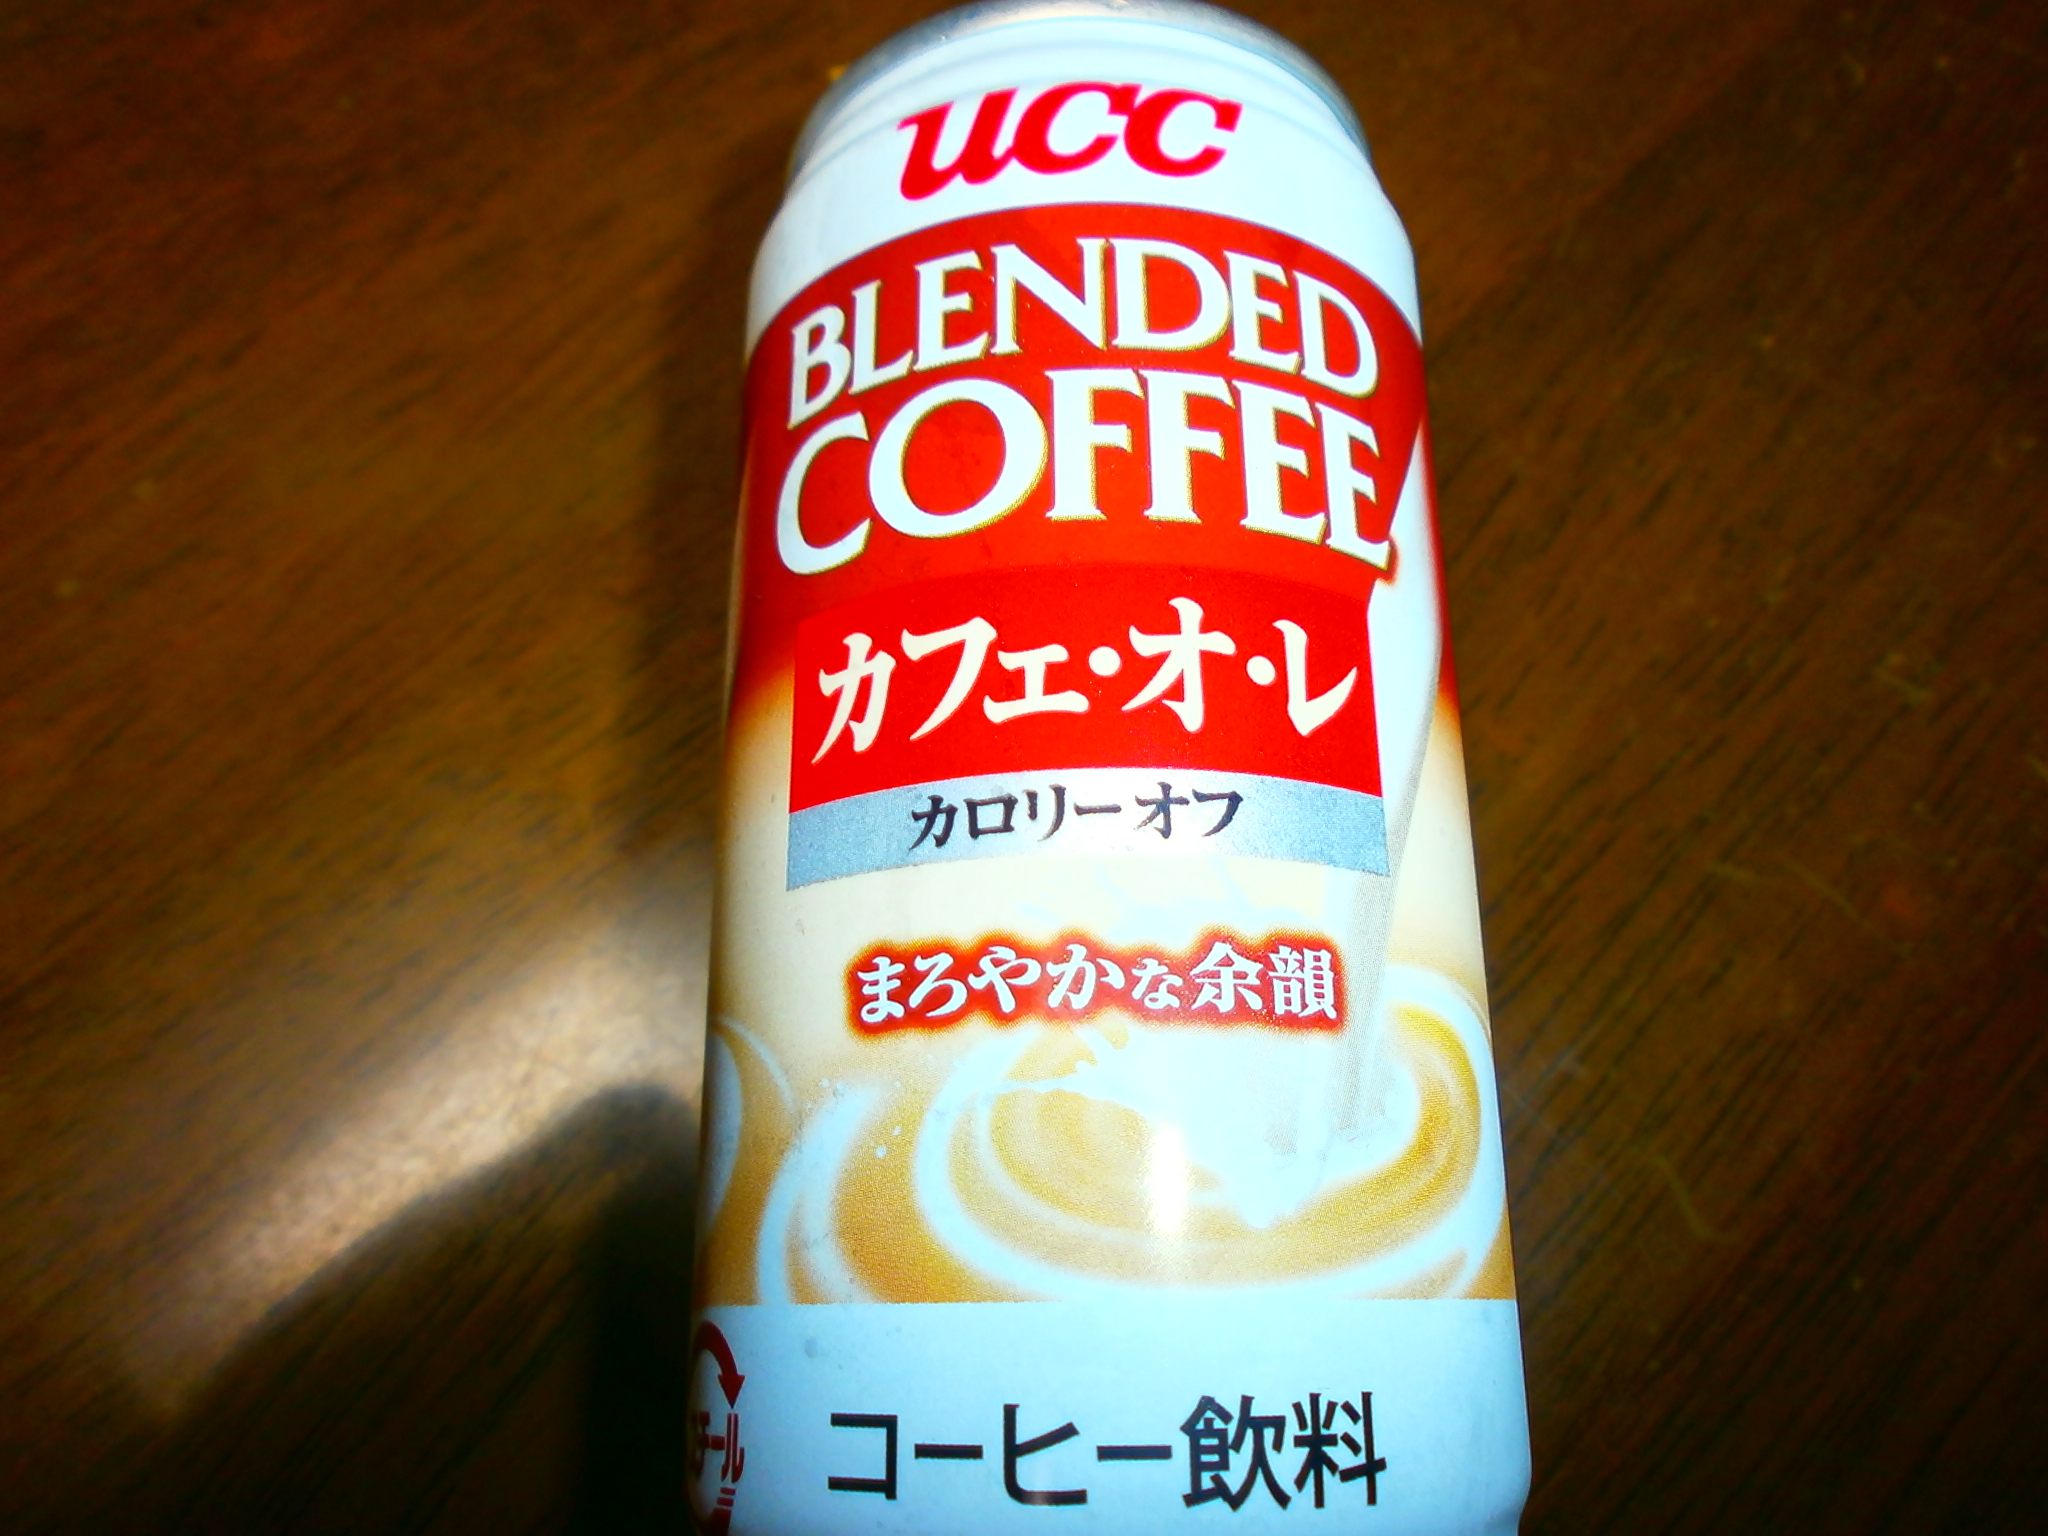 Кофе с молоком калории (UCC)